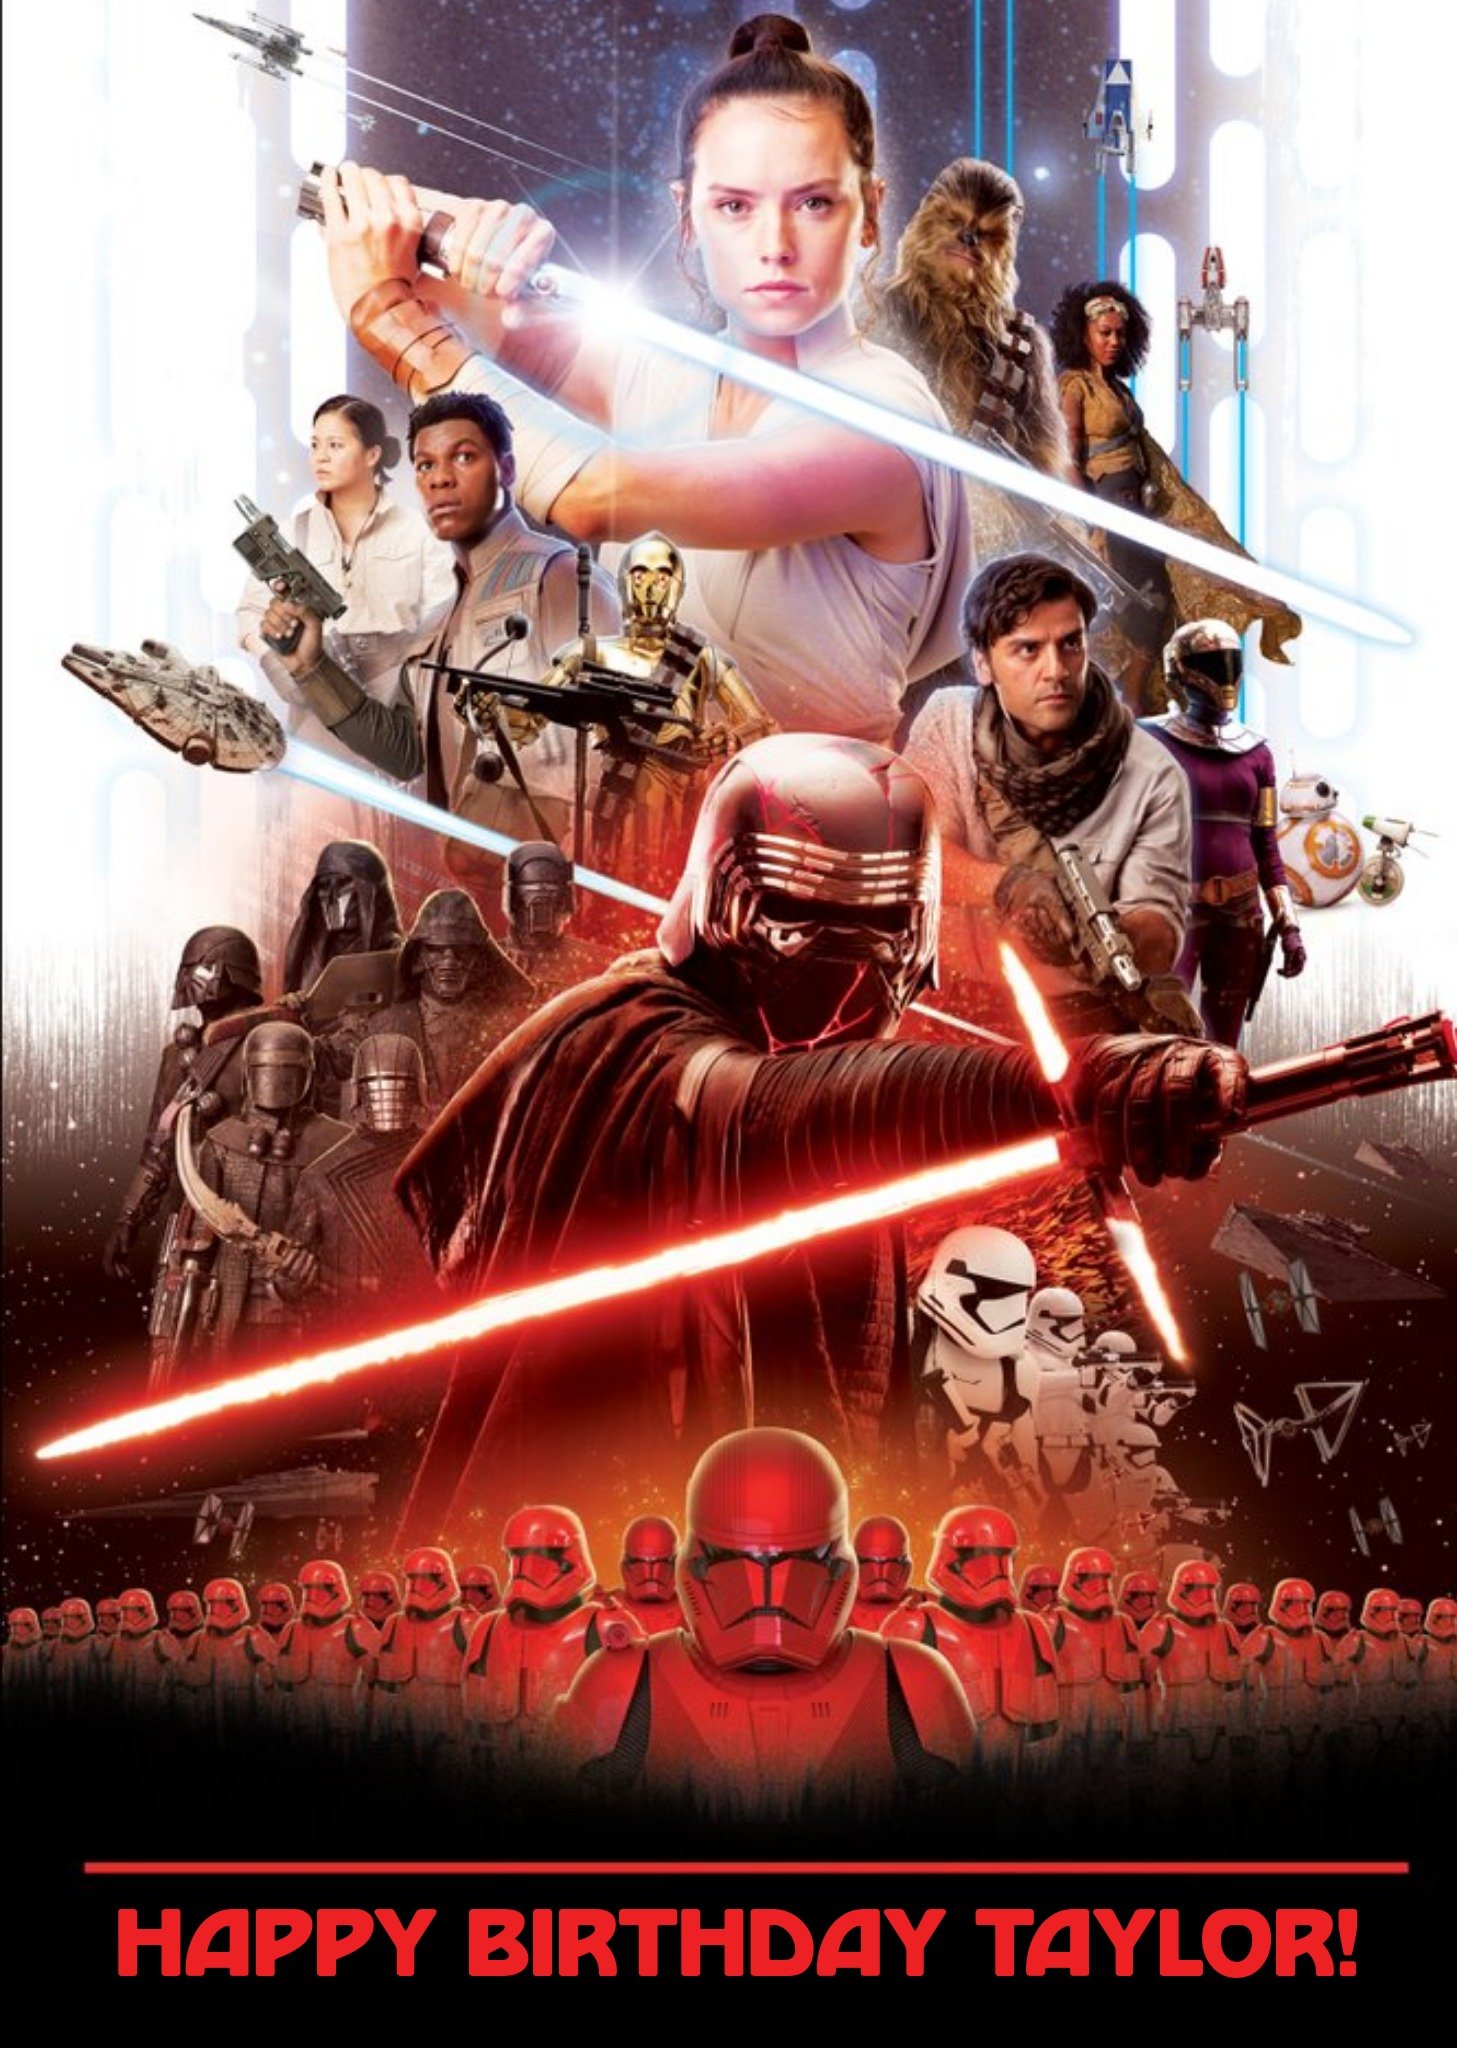 Disney Star Wars Episode 9 The Rise Of Skywalker Film Birthday Card, Large